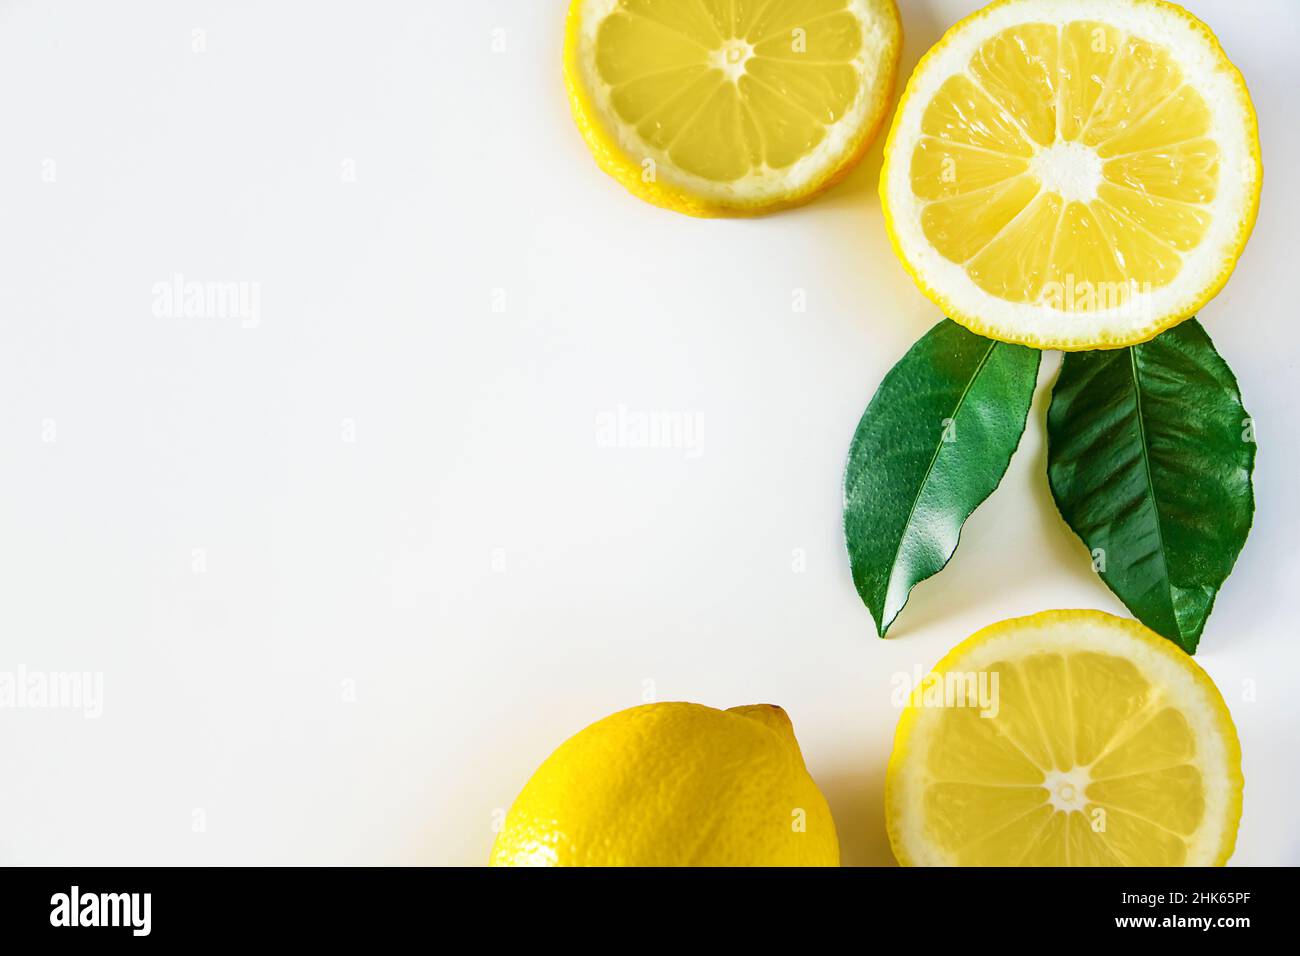 Ripe yellow lemon on white background. Antioxidant for healthy diet. Citrus fruit high in vitamin C. Stock Photo